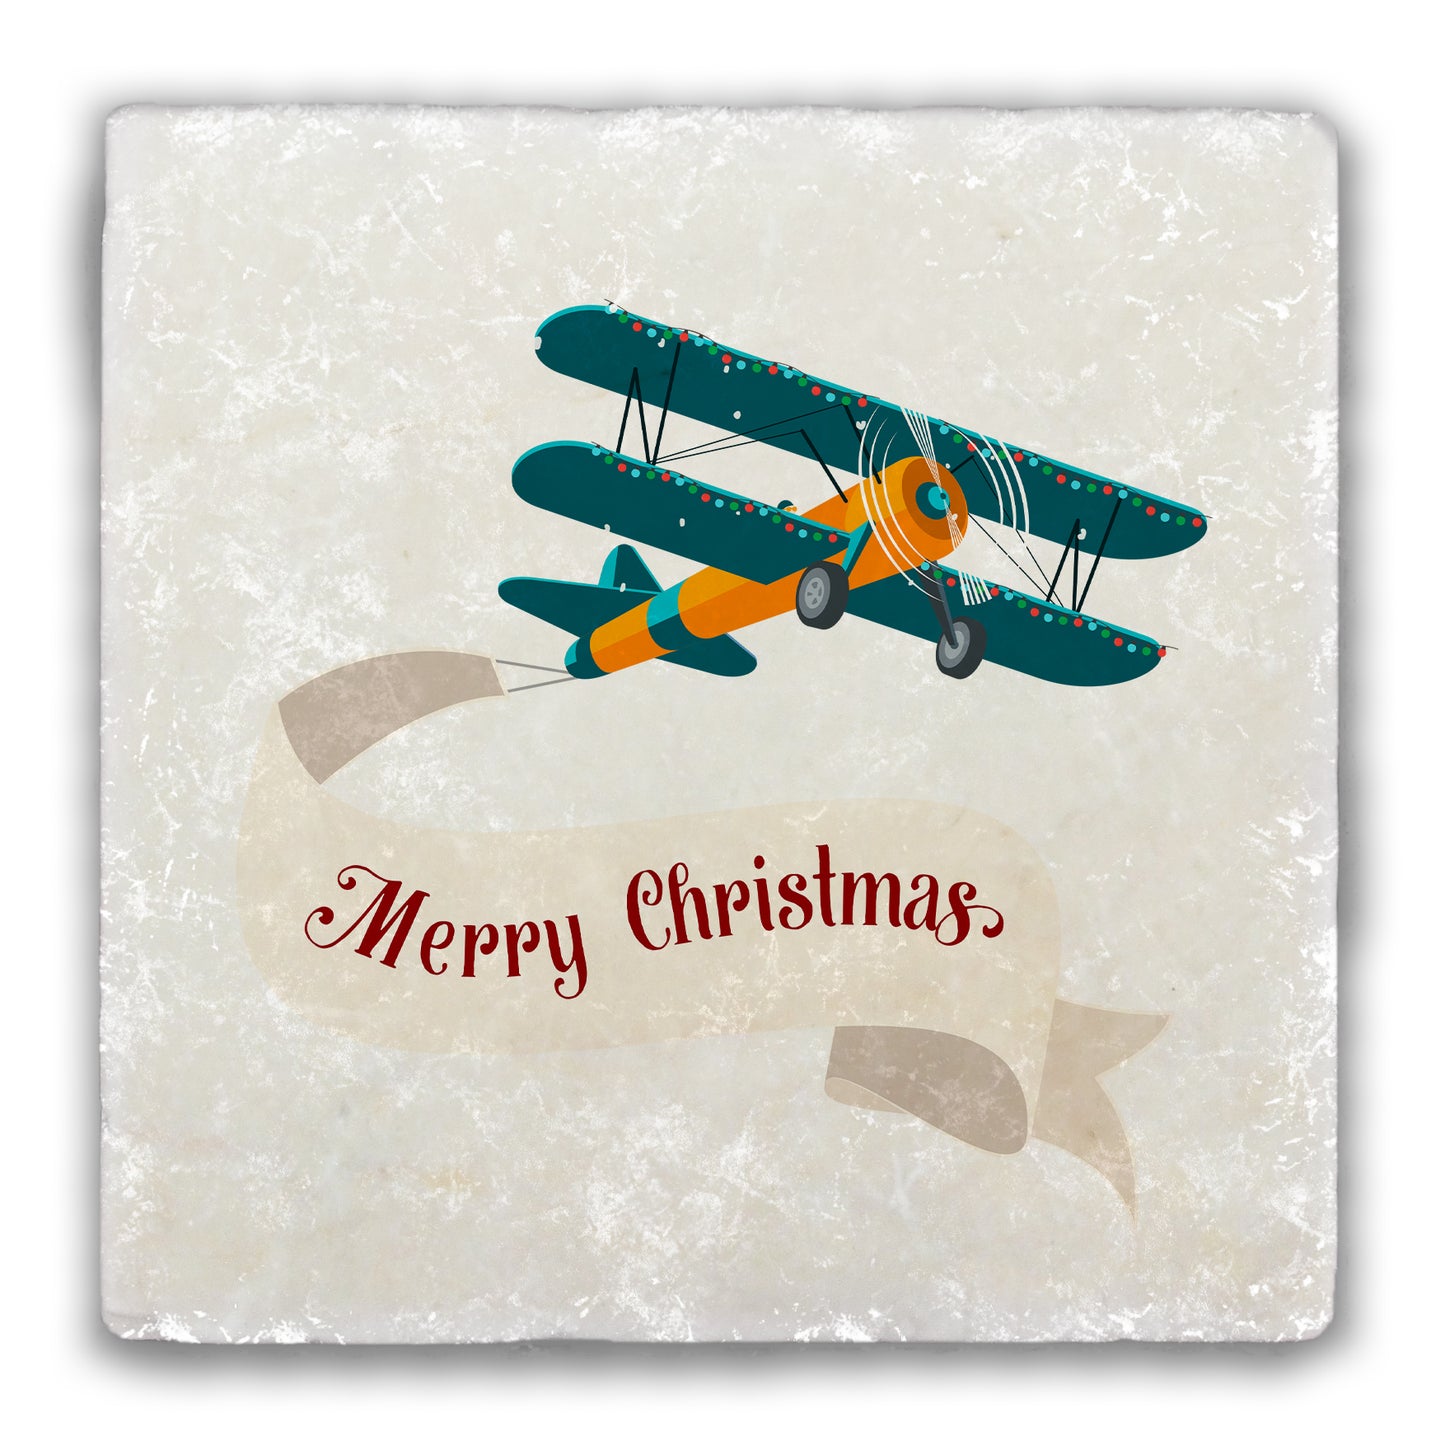 Merry Christmas Plane Tumbled Stone Coaster